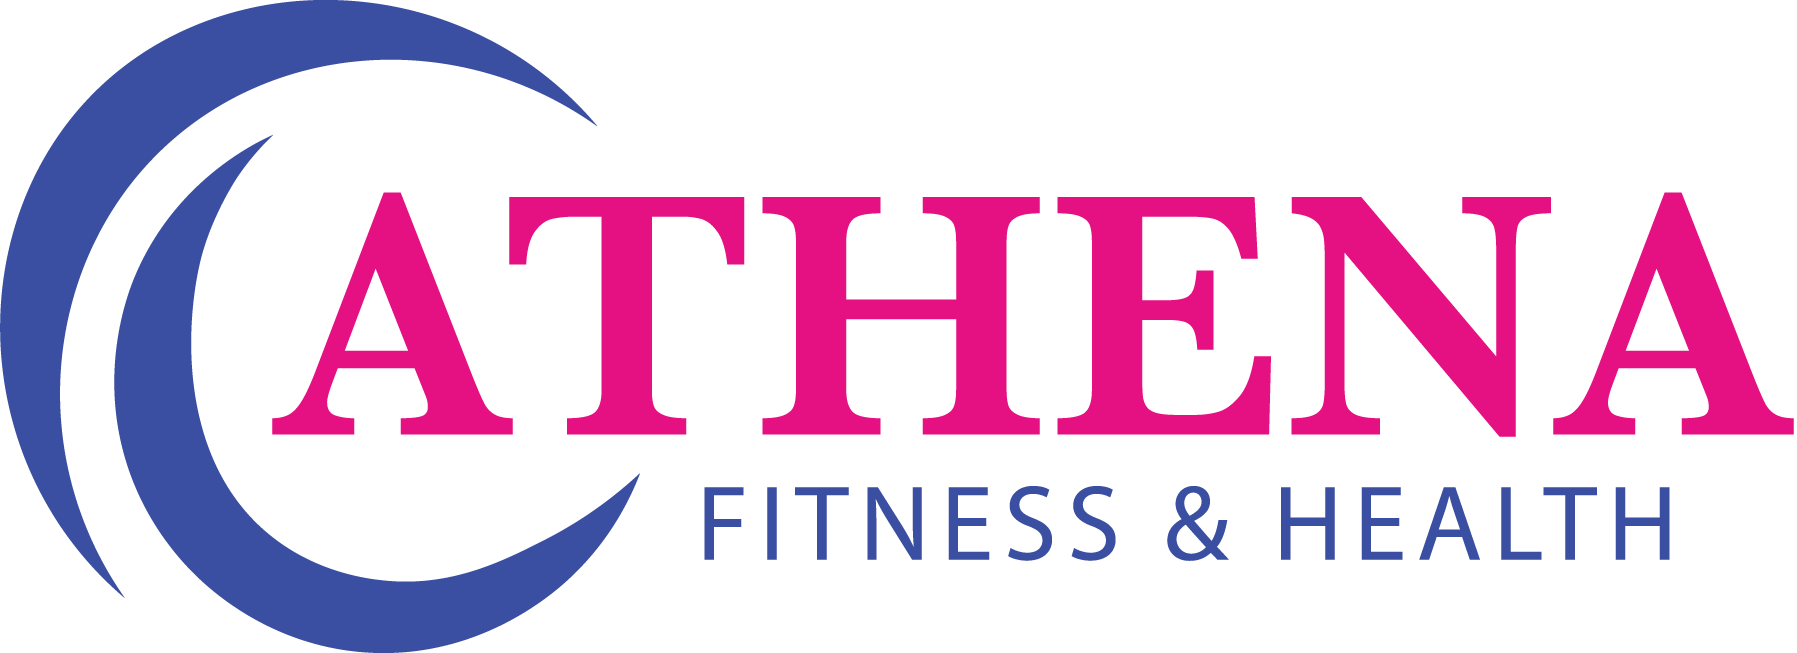 Athena Fitness & Health - Angel Foundation (1797x653)